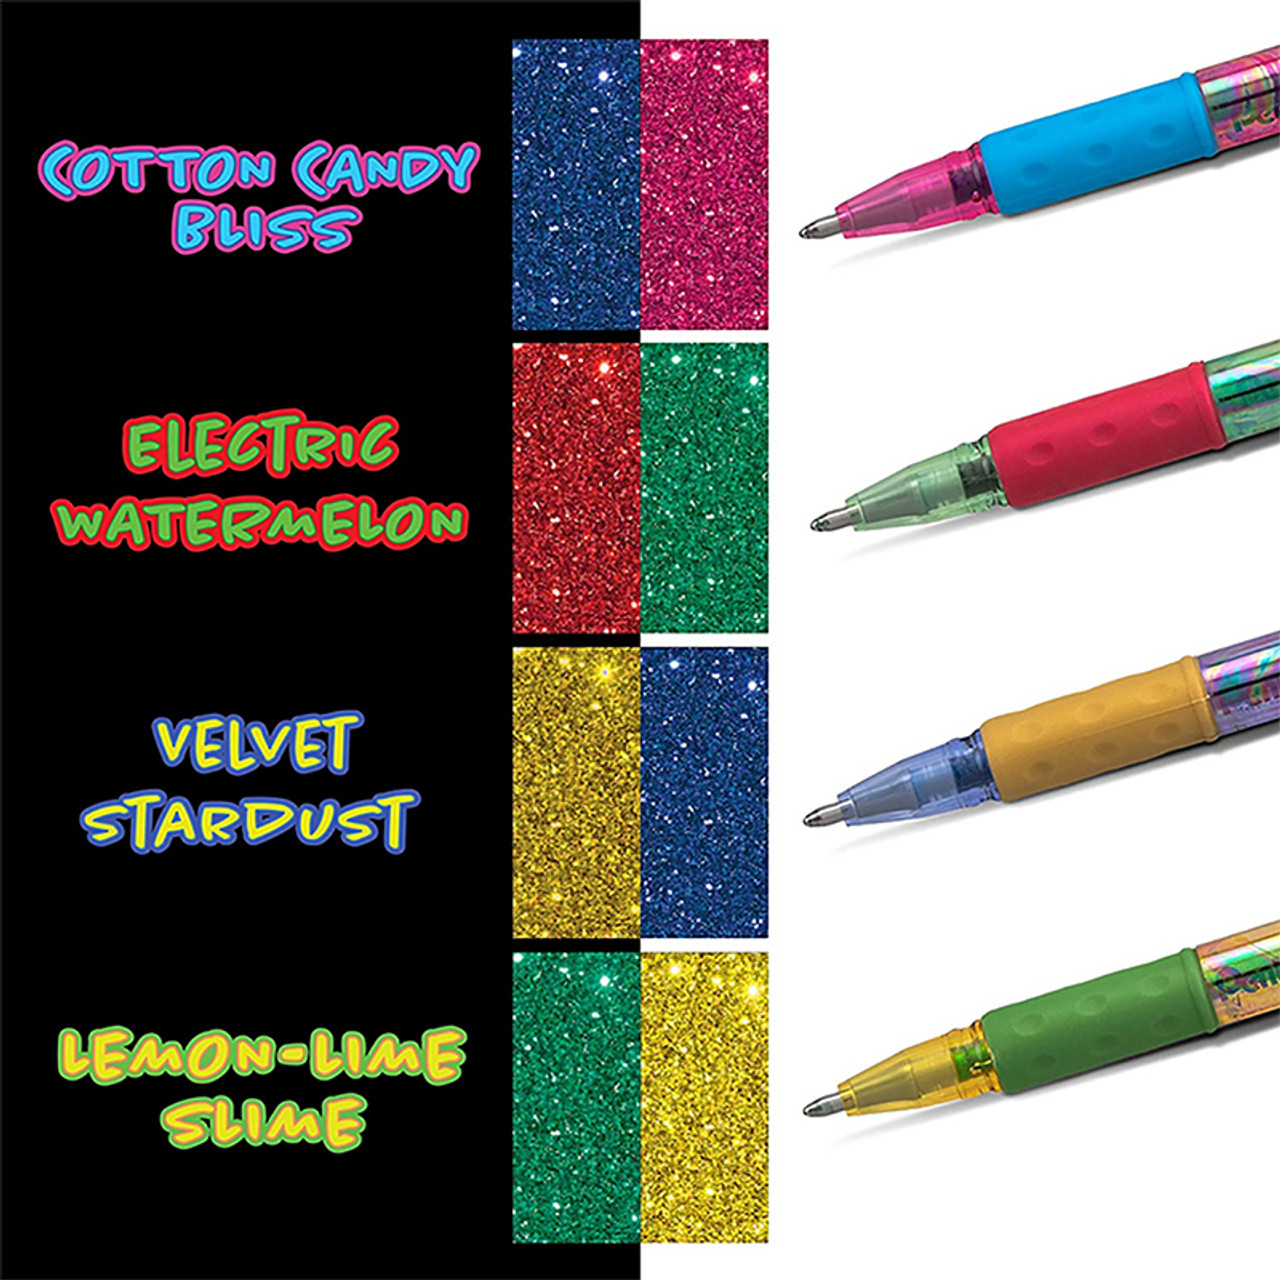 Similar to Sparkle Pop Gel Pens